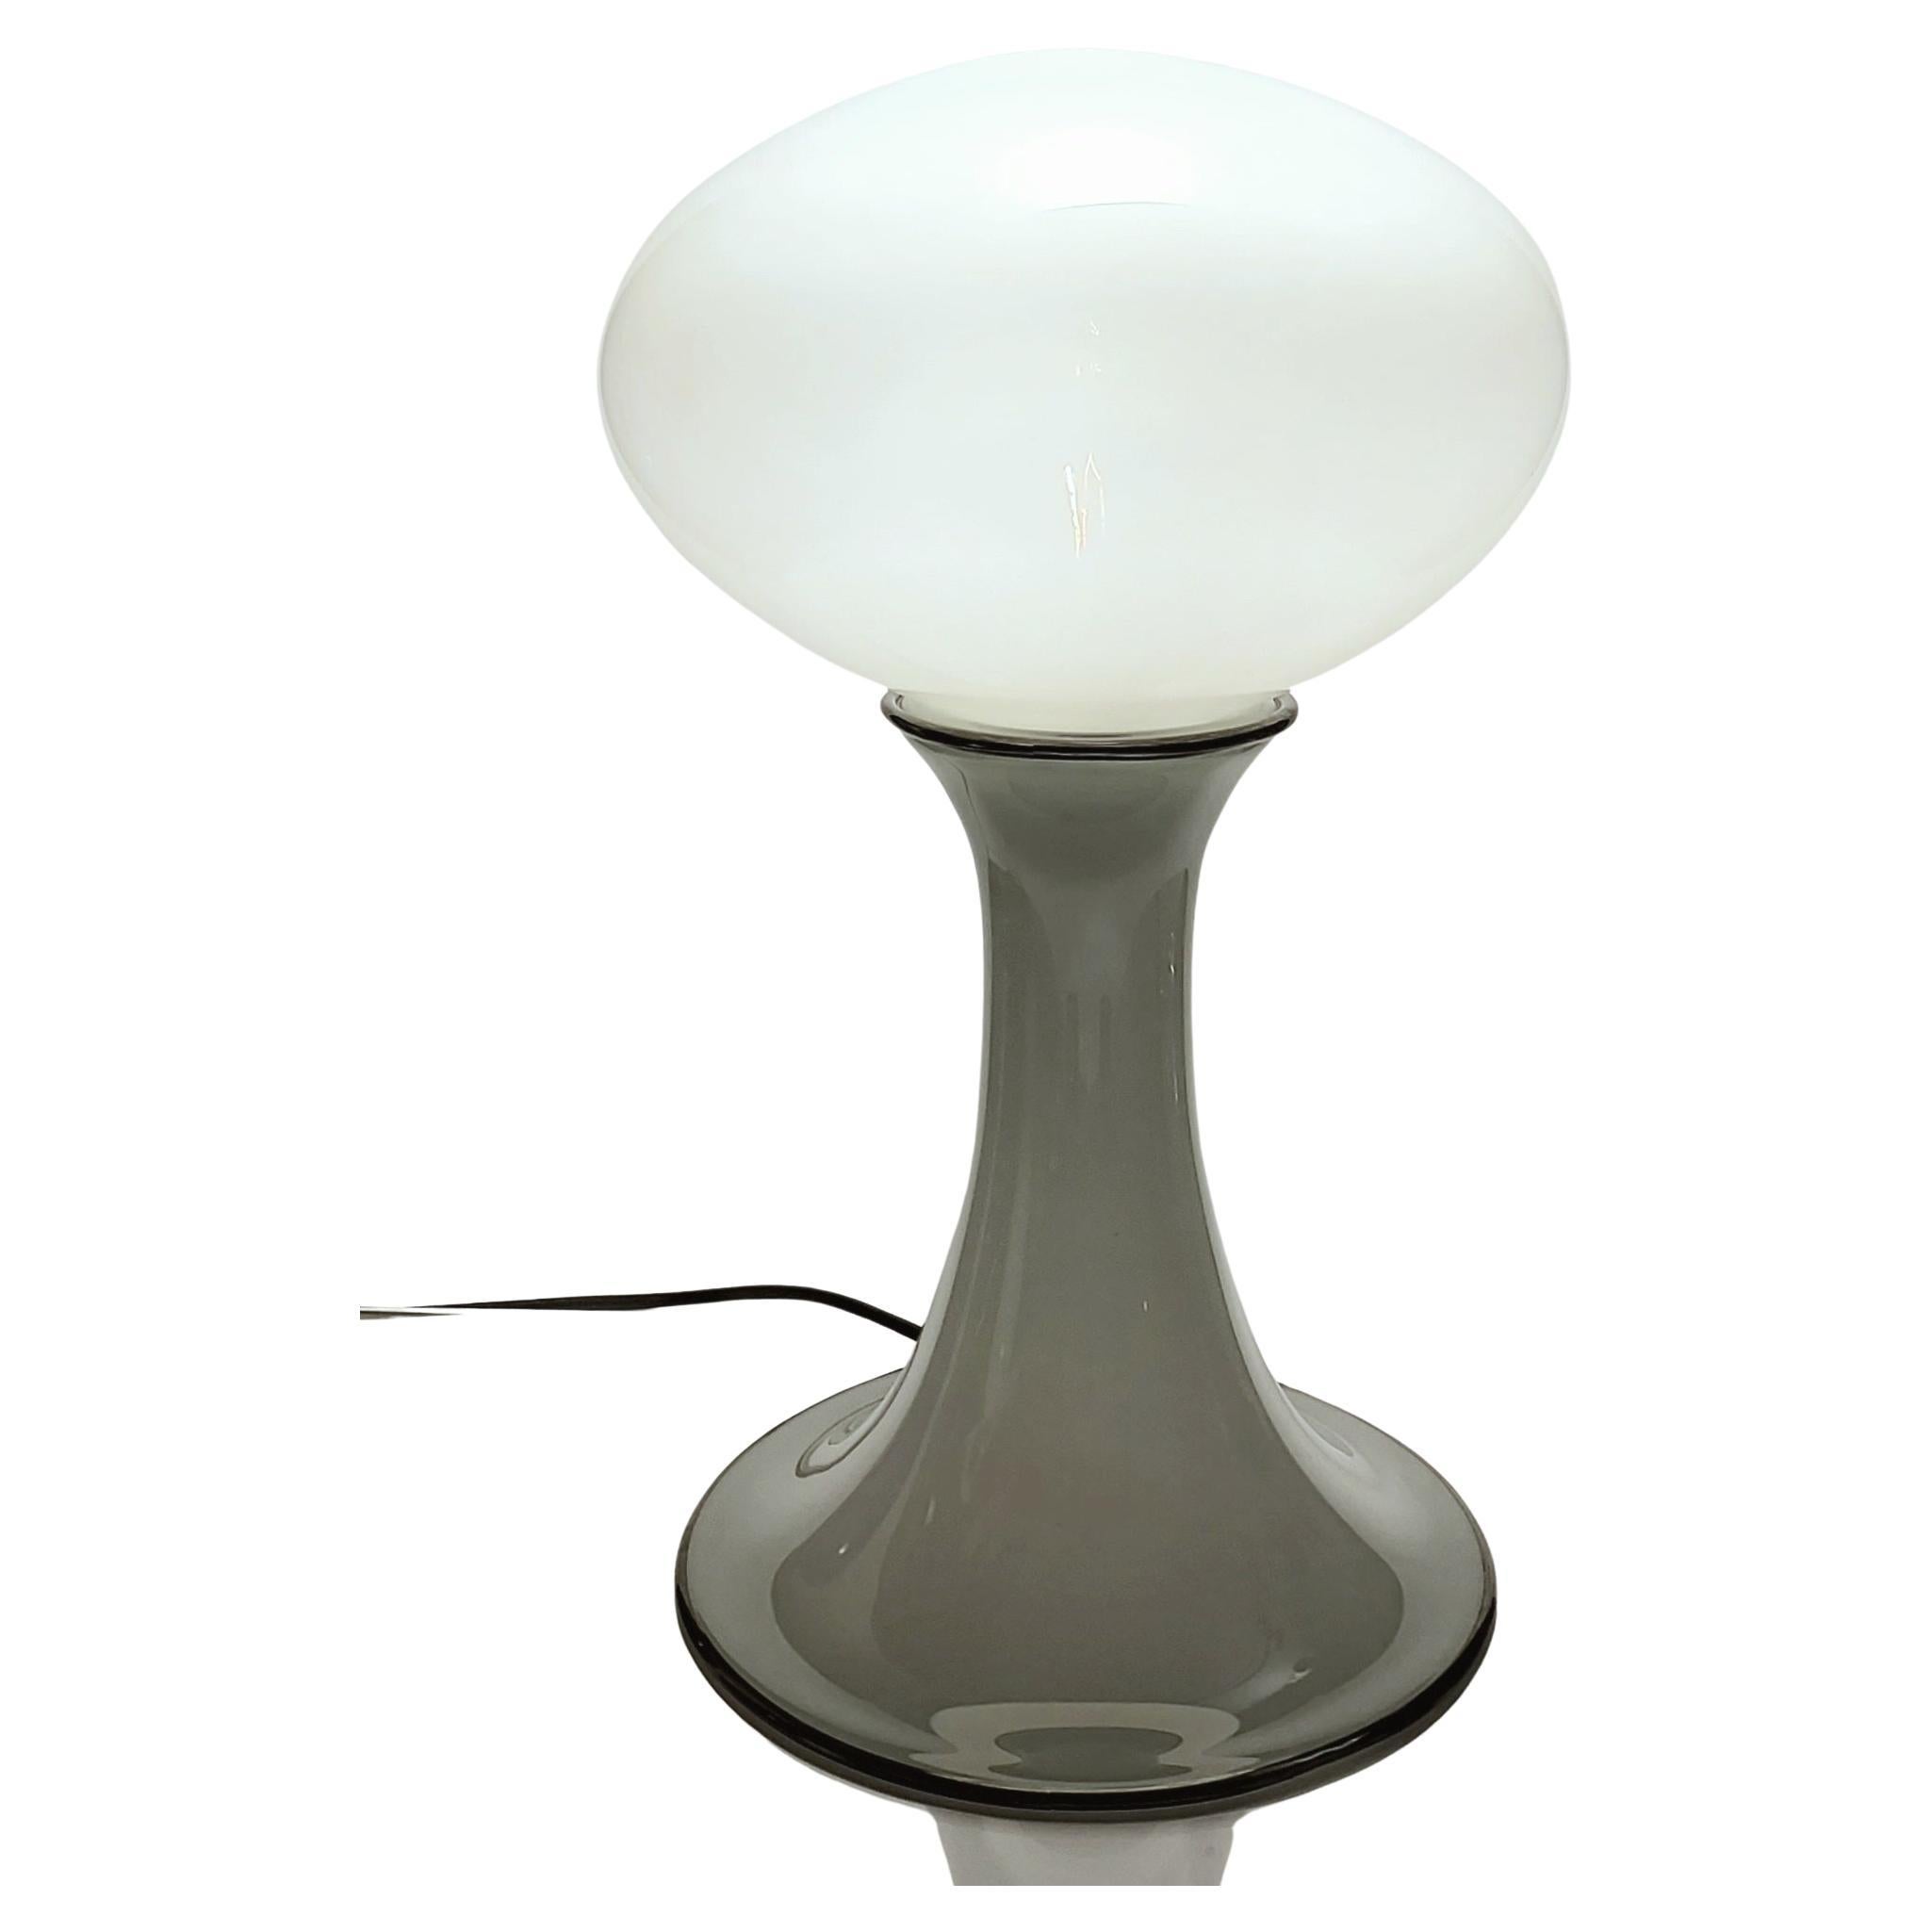 Futura Table Lamps, Handmade Contemporary Luxury Glass Lighting